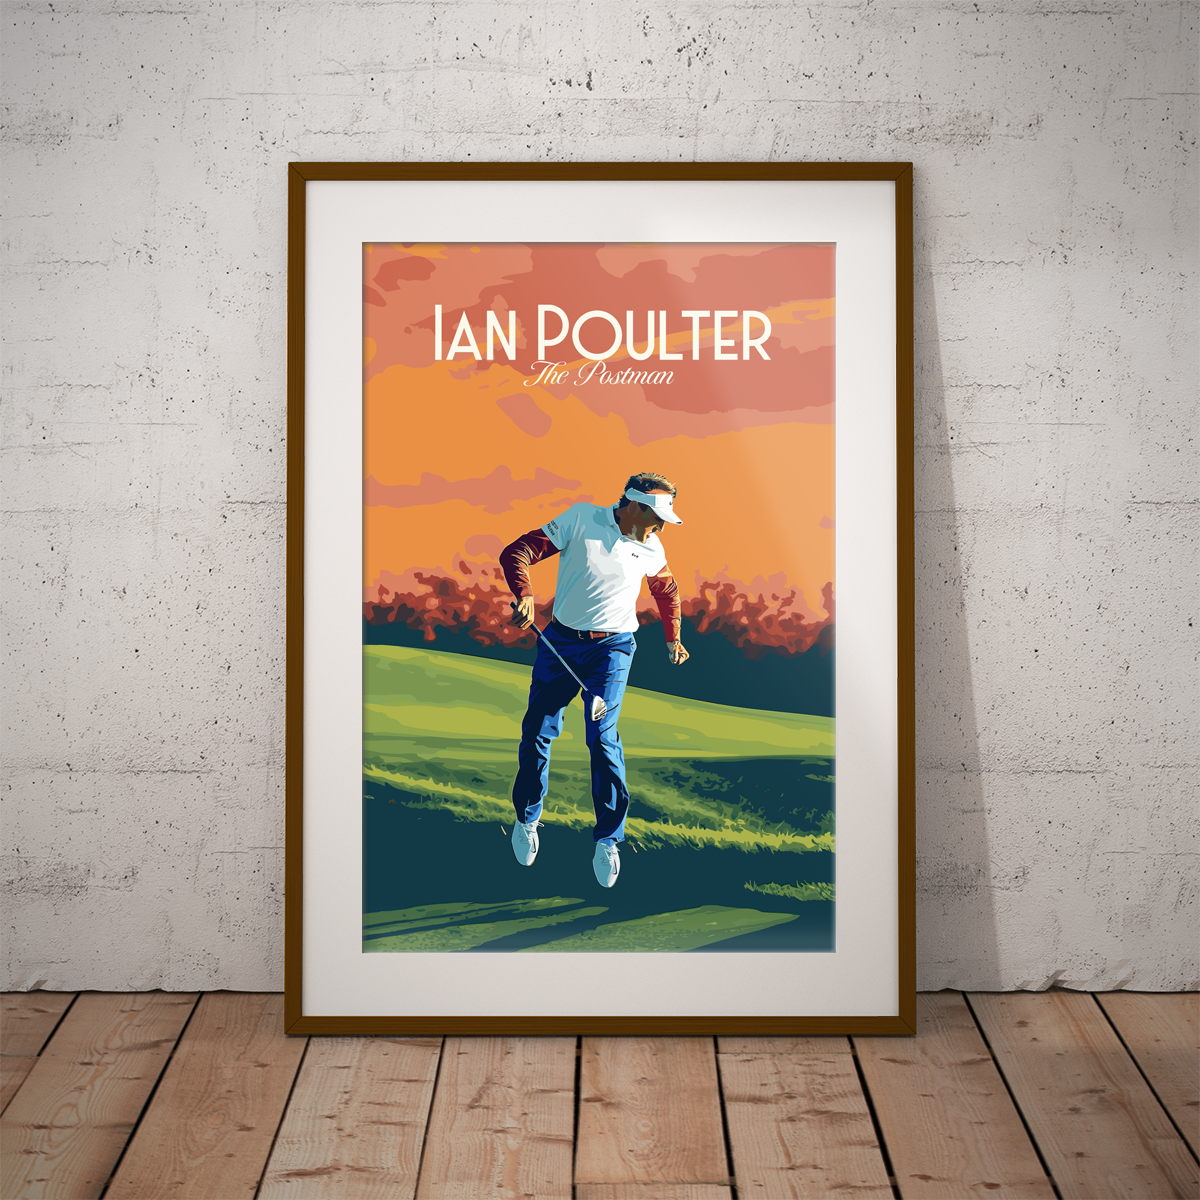 Ian Poulter poster by bon voyage design